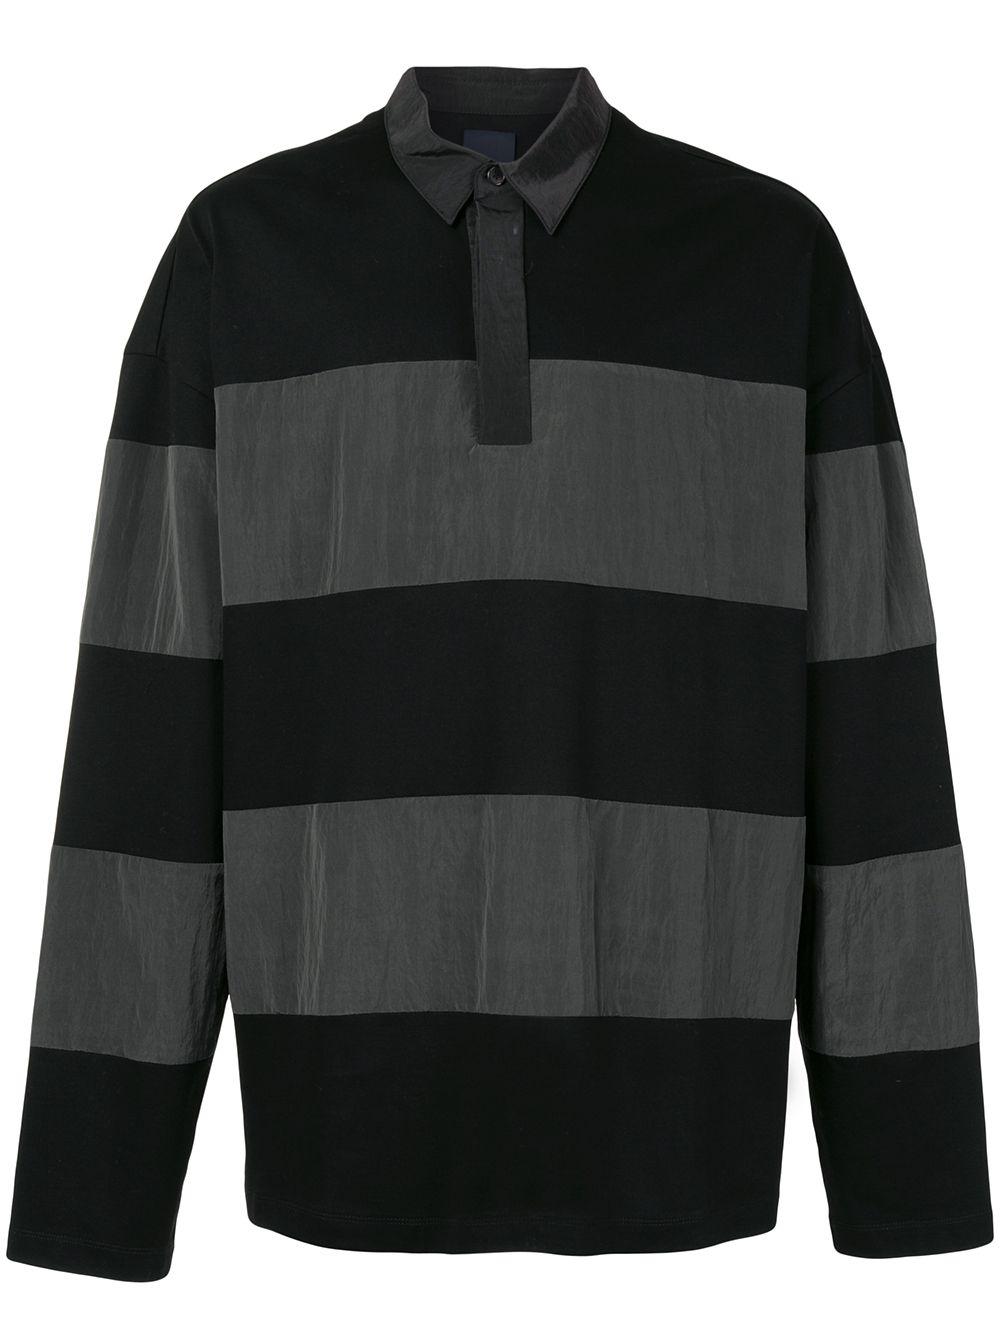 Juun.J Cotton Oversized Striped Polo Shirt in Black for Men - Lyst